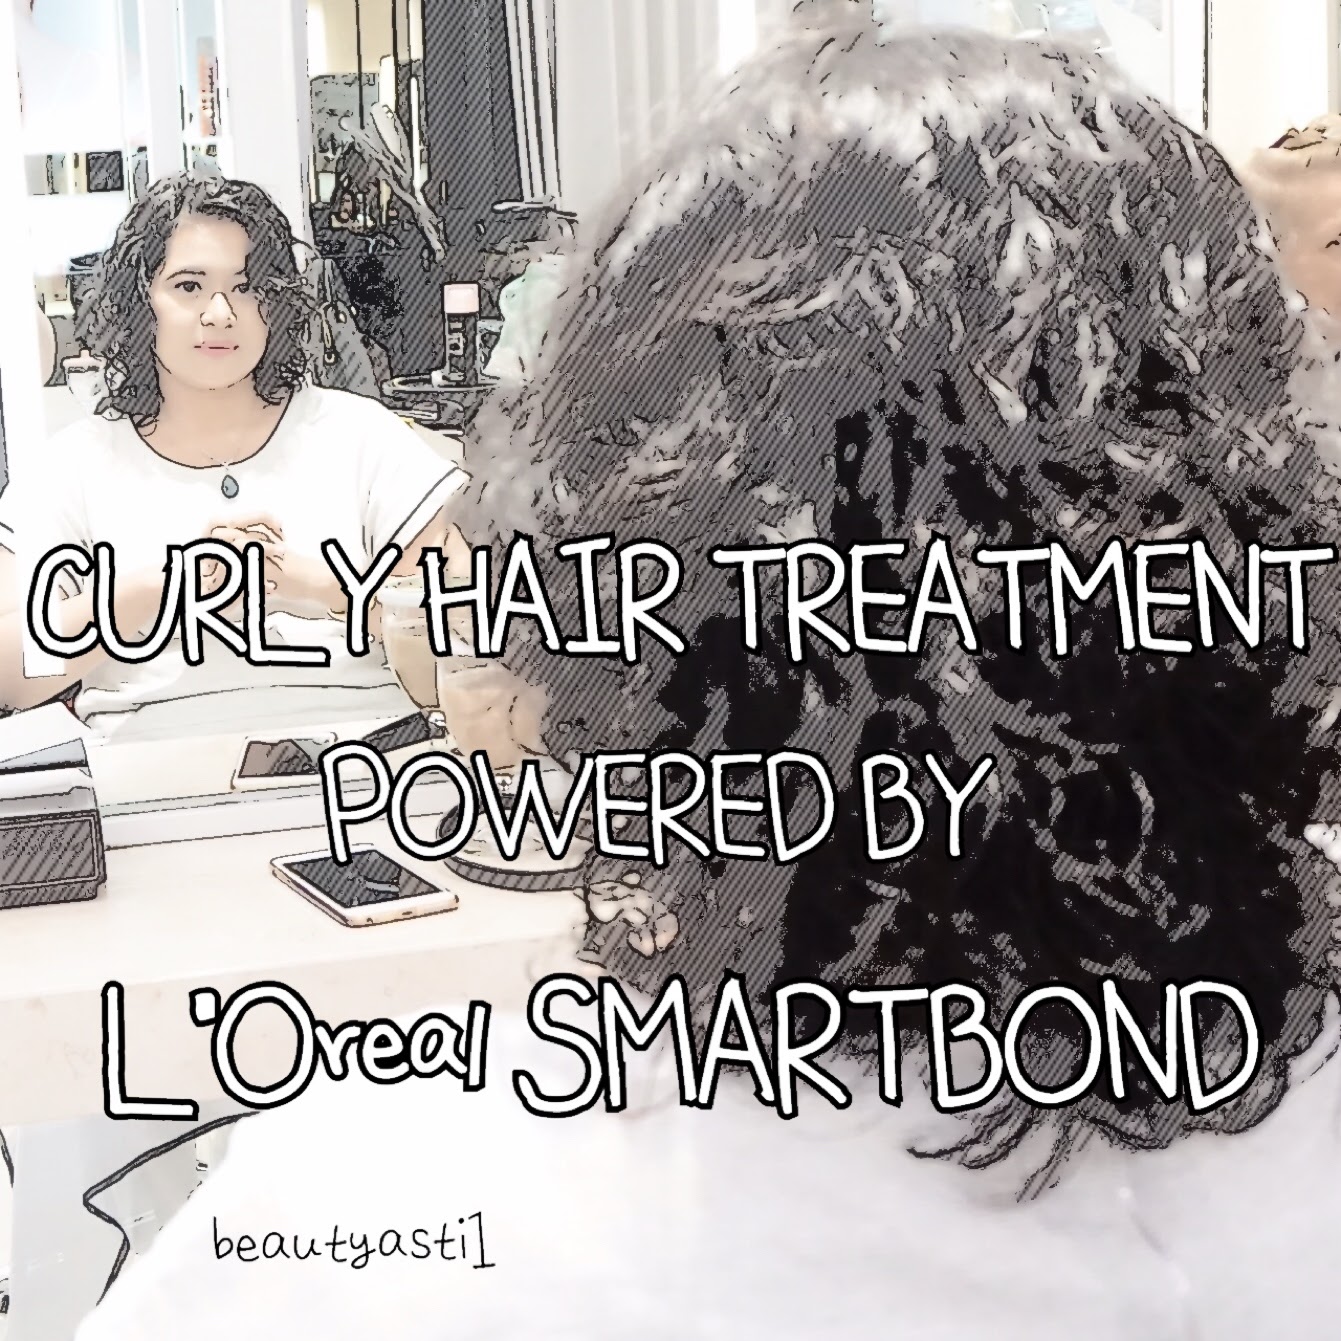 CURLY HAIR TREATMENT AT IRWAN TEAM SALON POWERED BY LOREAL